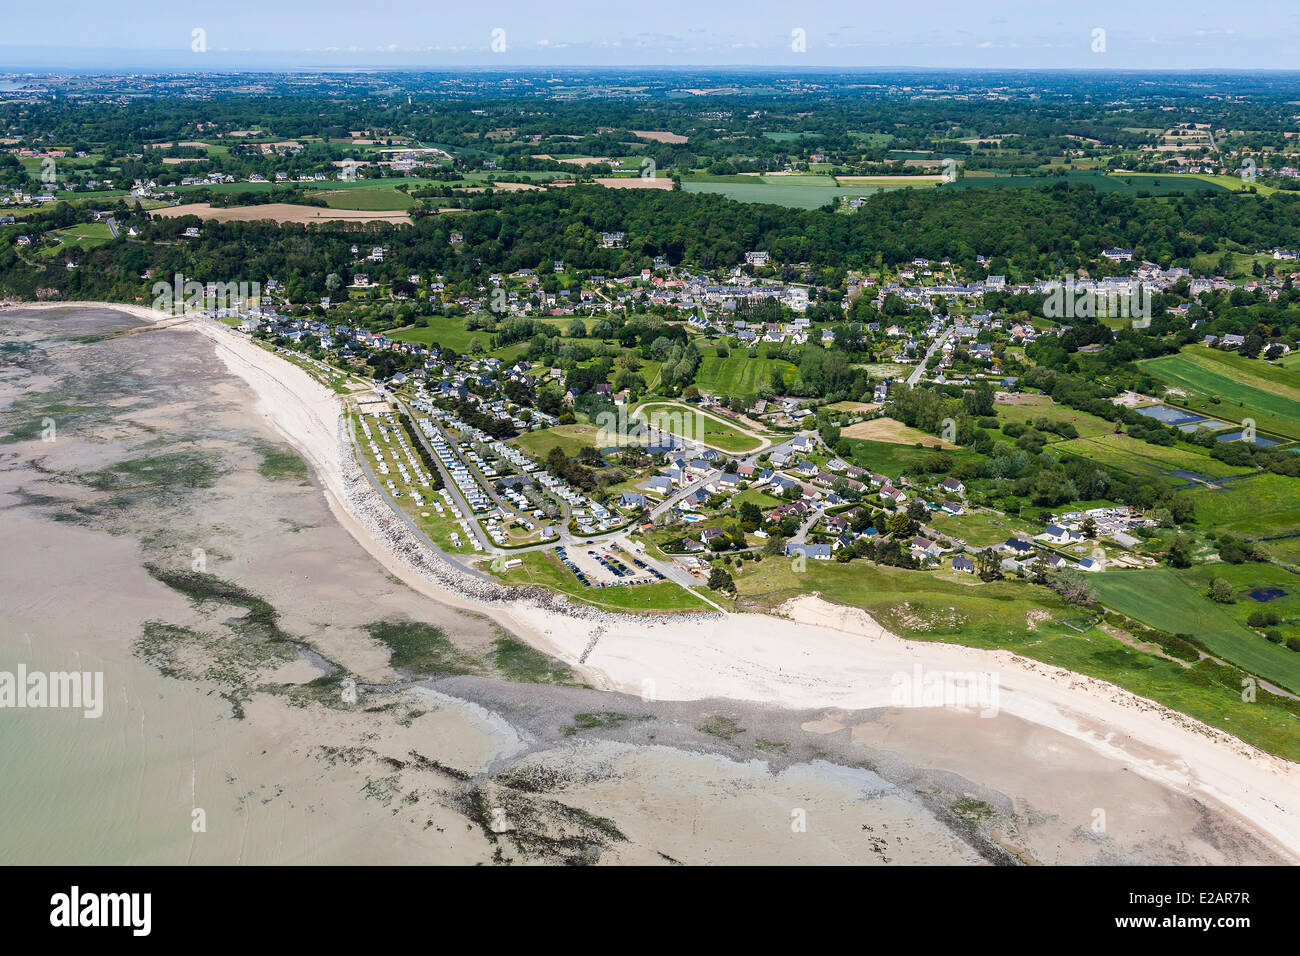 France, Manche, Saint Jean le Thomas (aerial view) Stock Photo